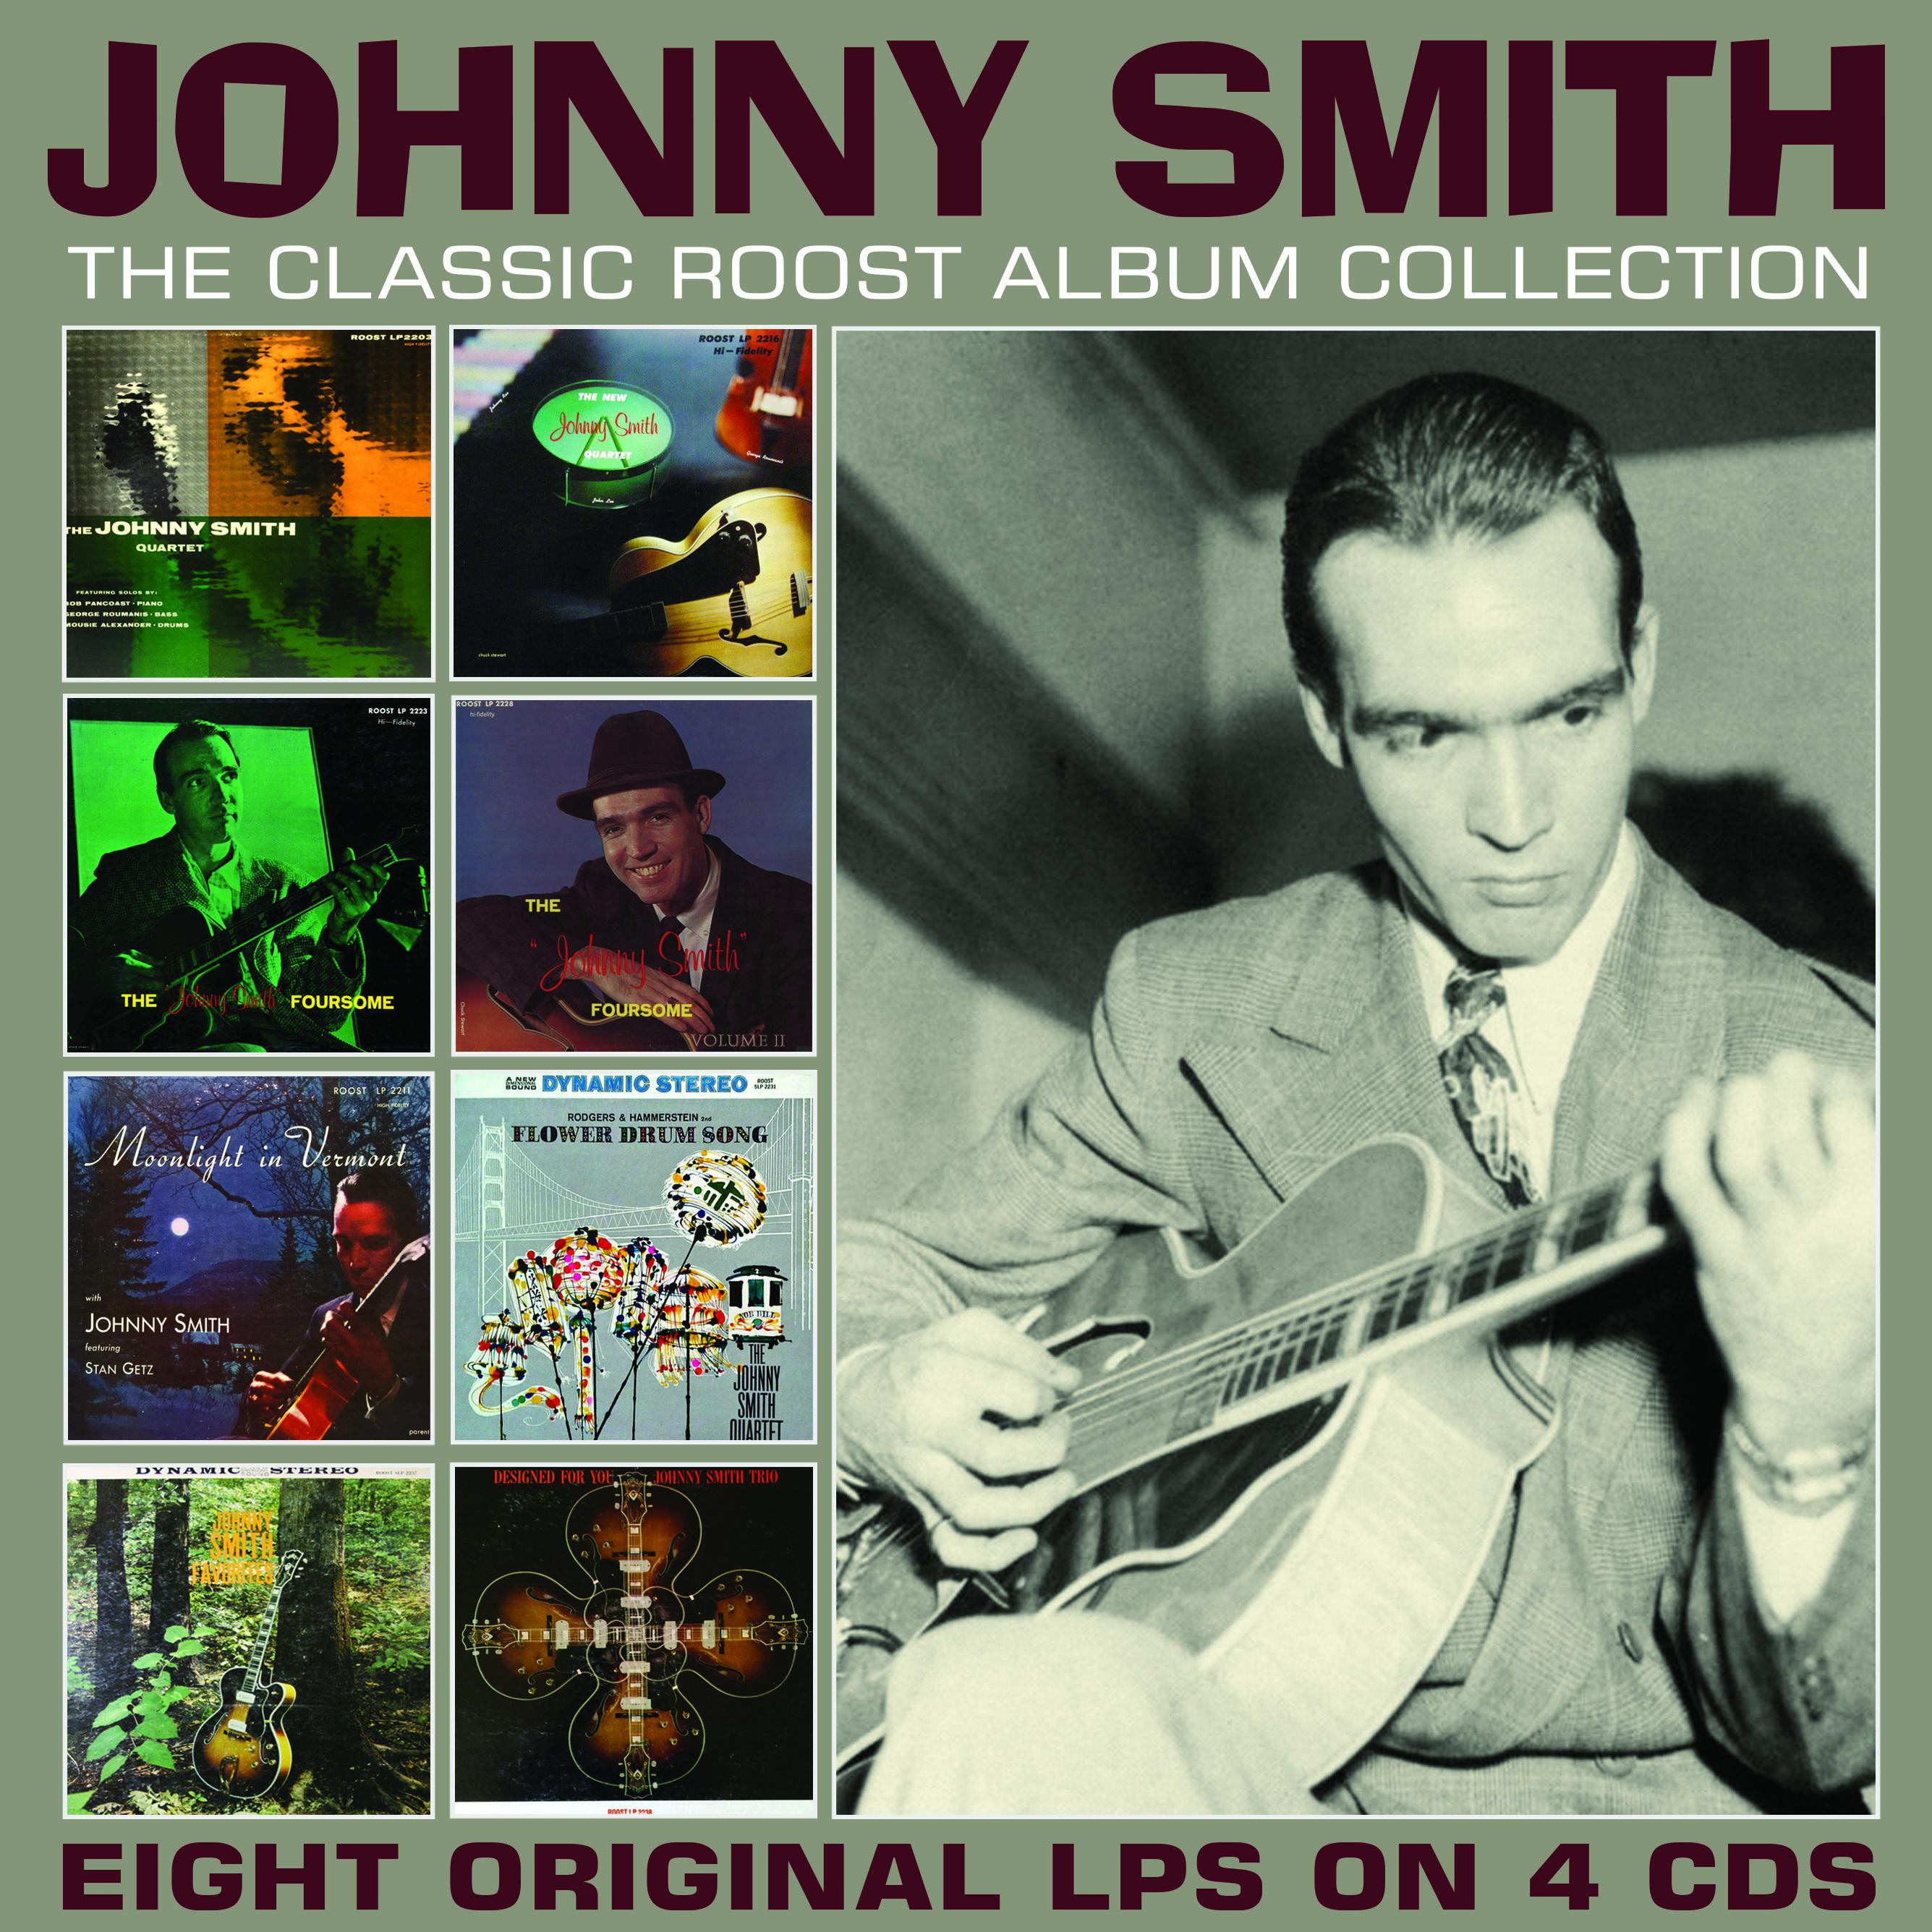 Johnny Smith - Tenderly